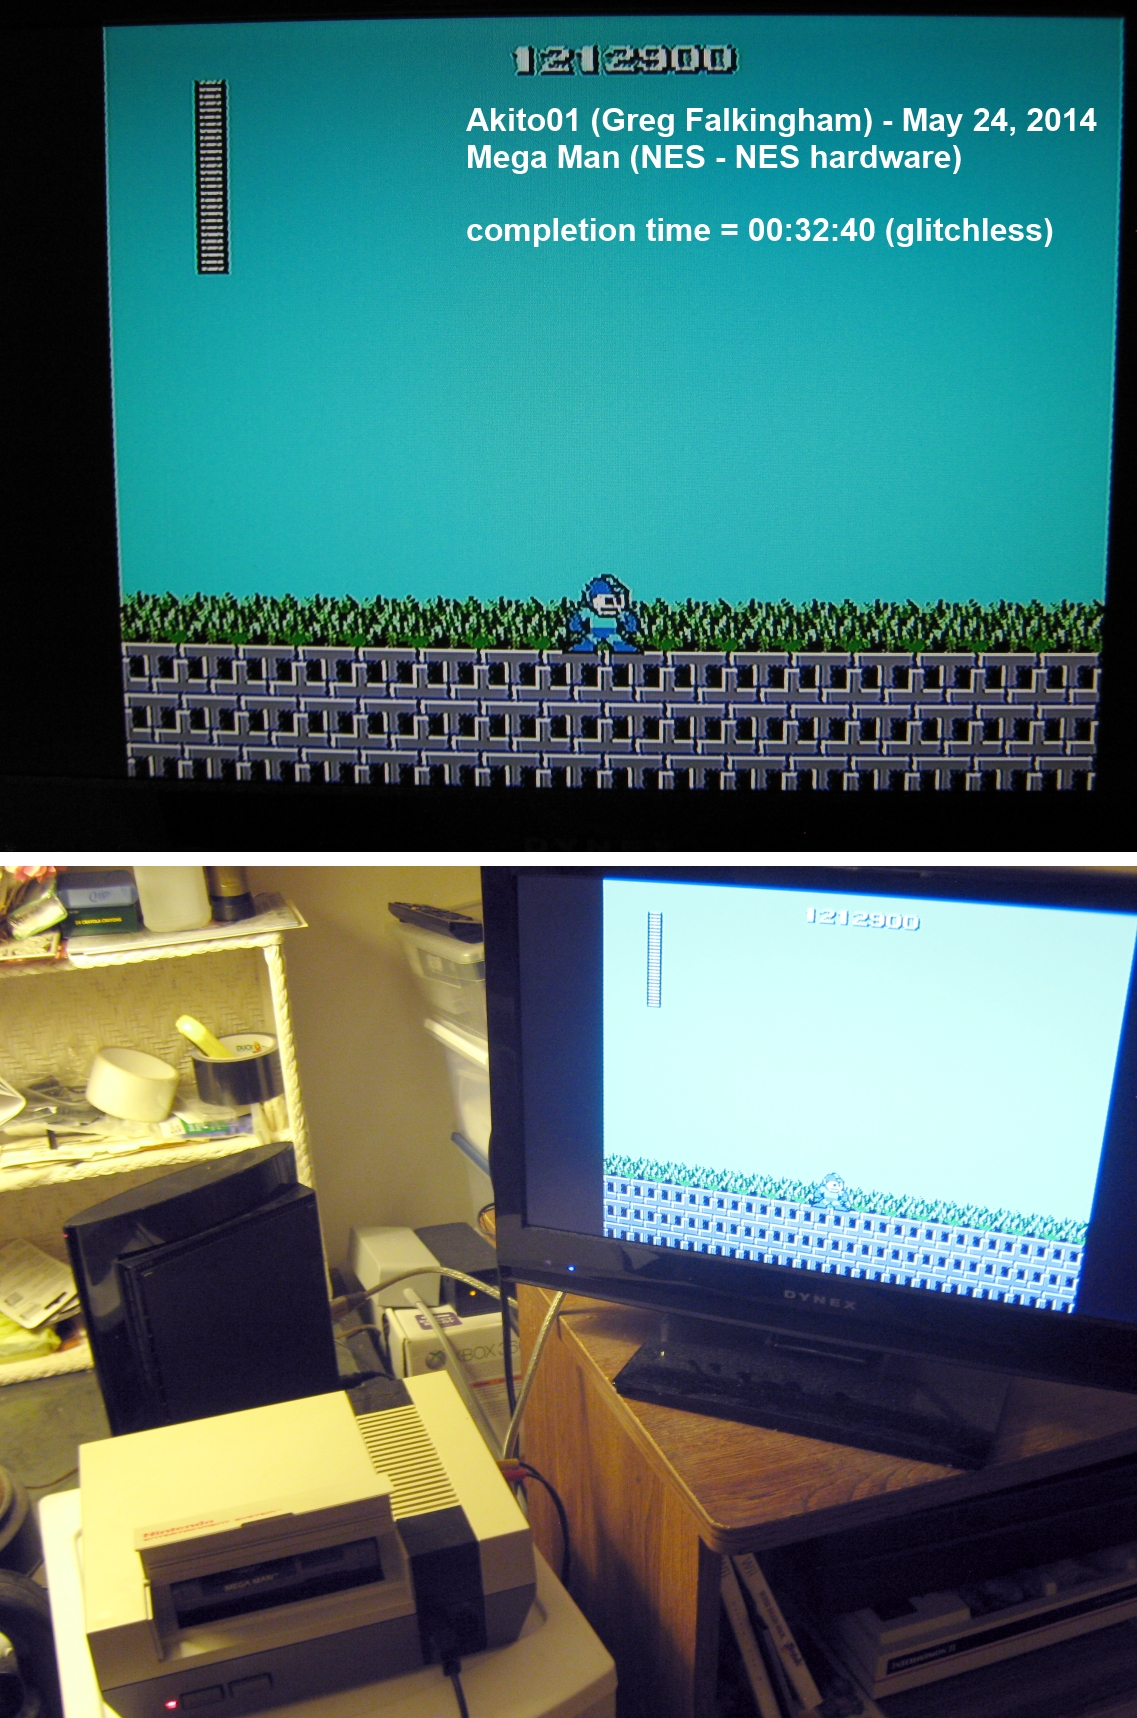 Akito01: Mega Man [No Farming] (NES/Famicom) 1,212,900 points on 2014-05-24 22:33:41